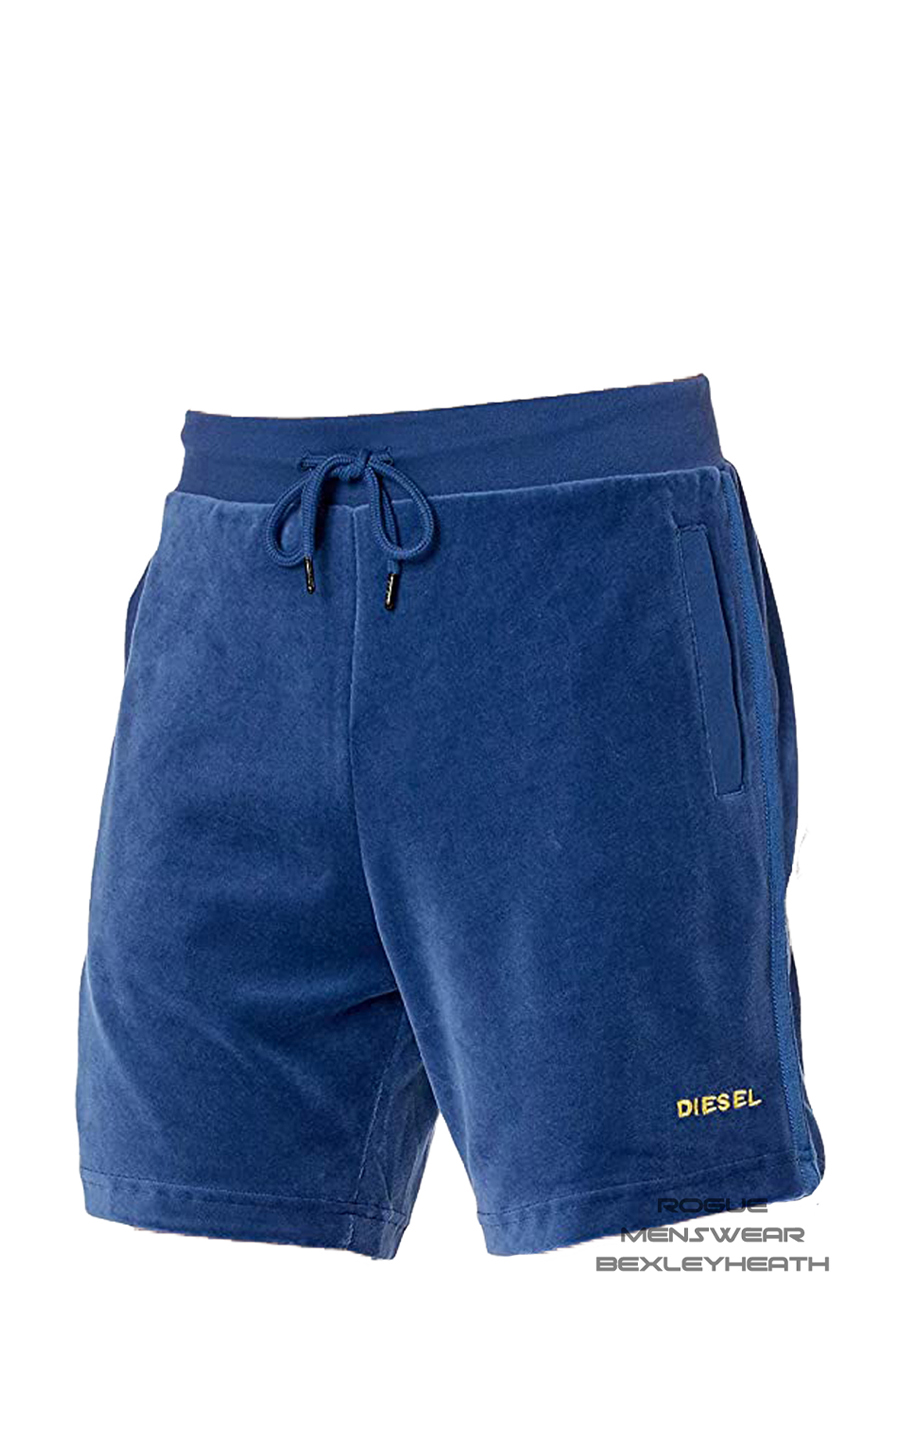 Settle Contradict Normalization Diesel Eddy Velour Lounge Shorts - Rogue Menswear